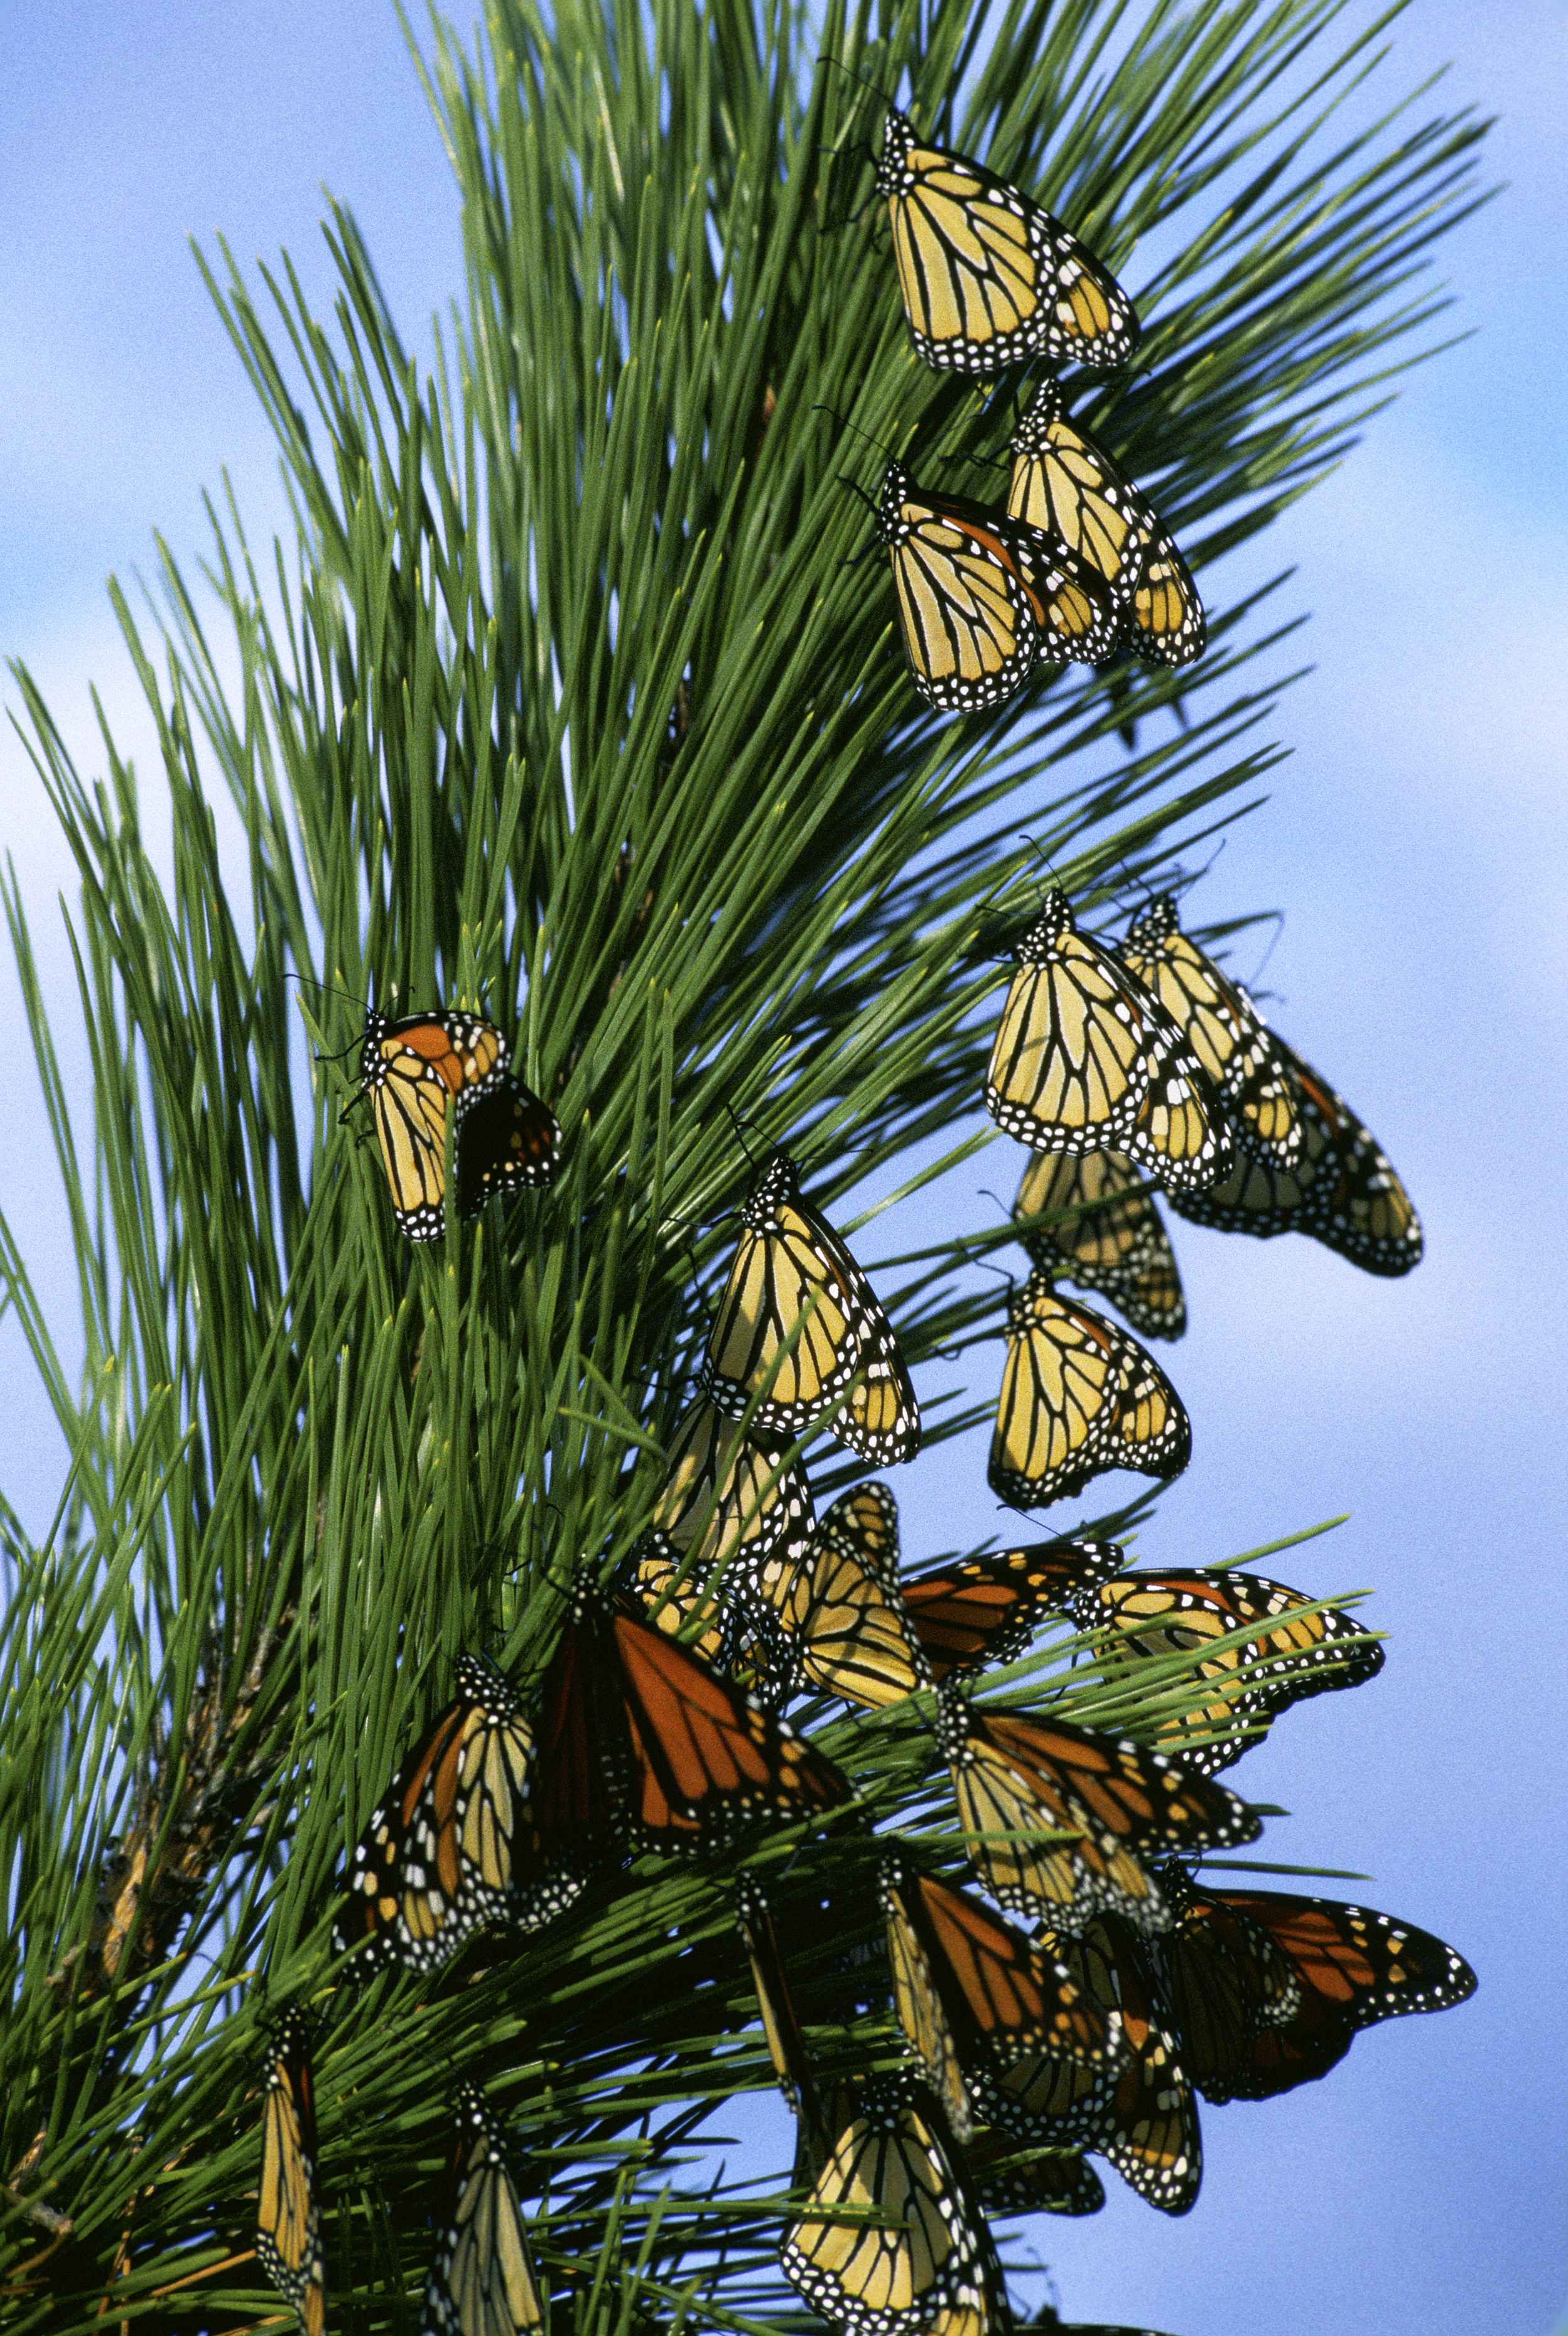 Danus plexippus butterflies